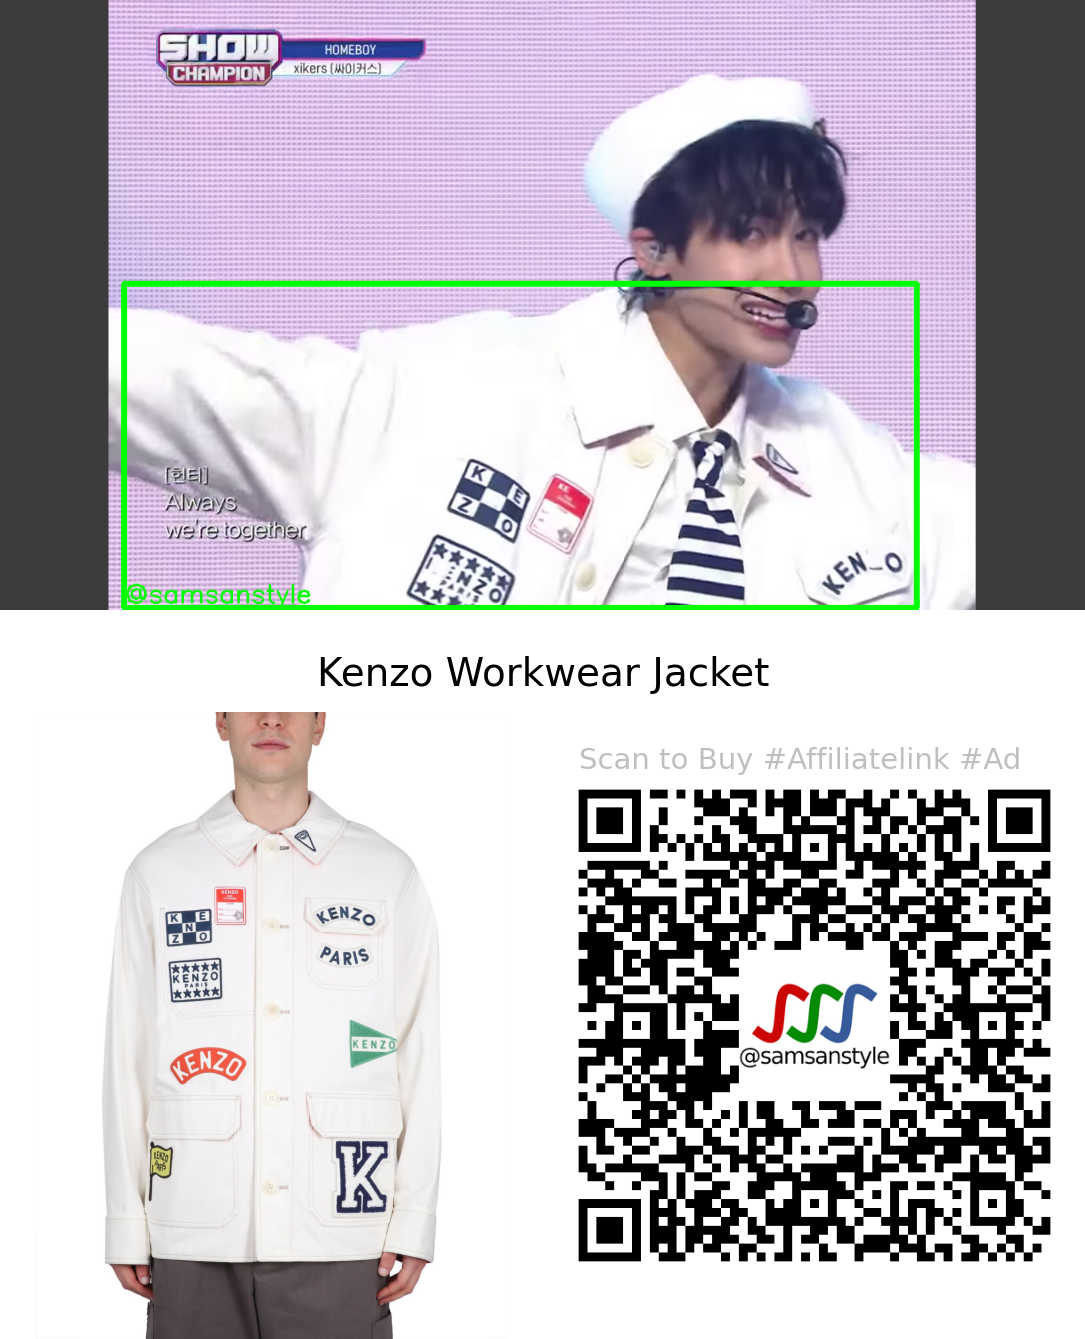 xikers Hunter | HOMEBOY MBC M Show Champion | Kenzo Workwear Jacket